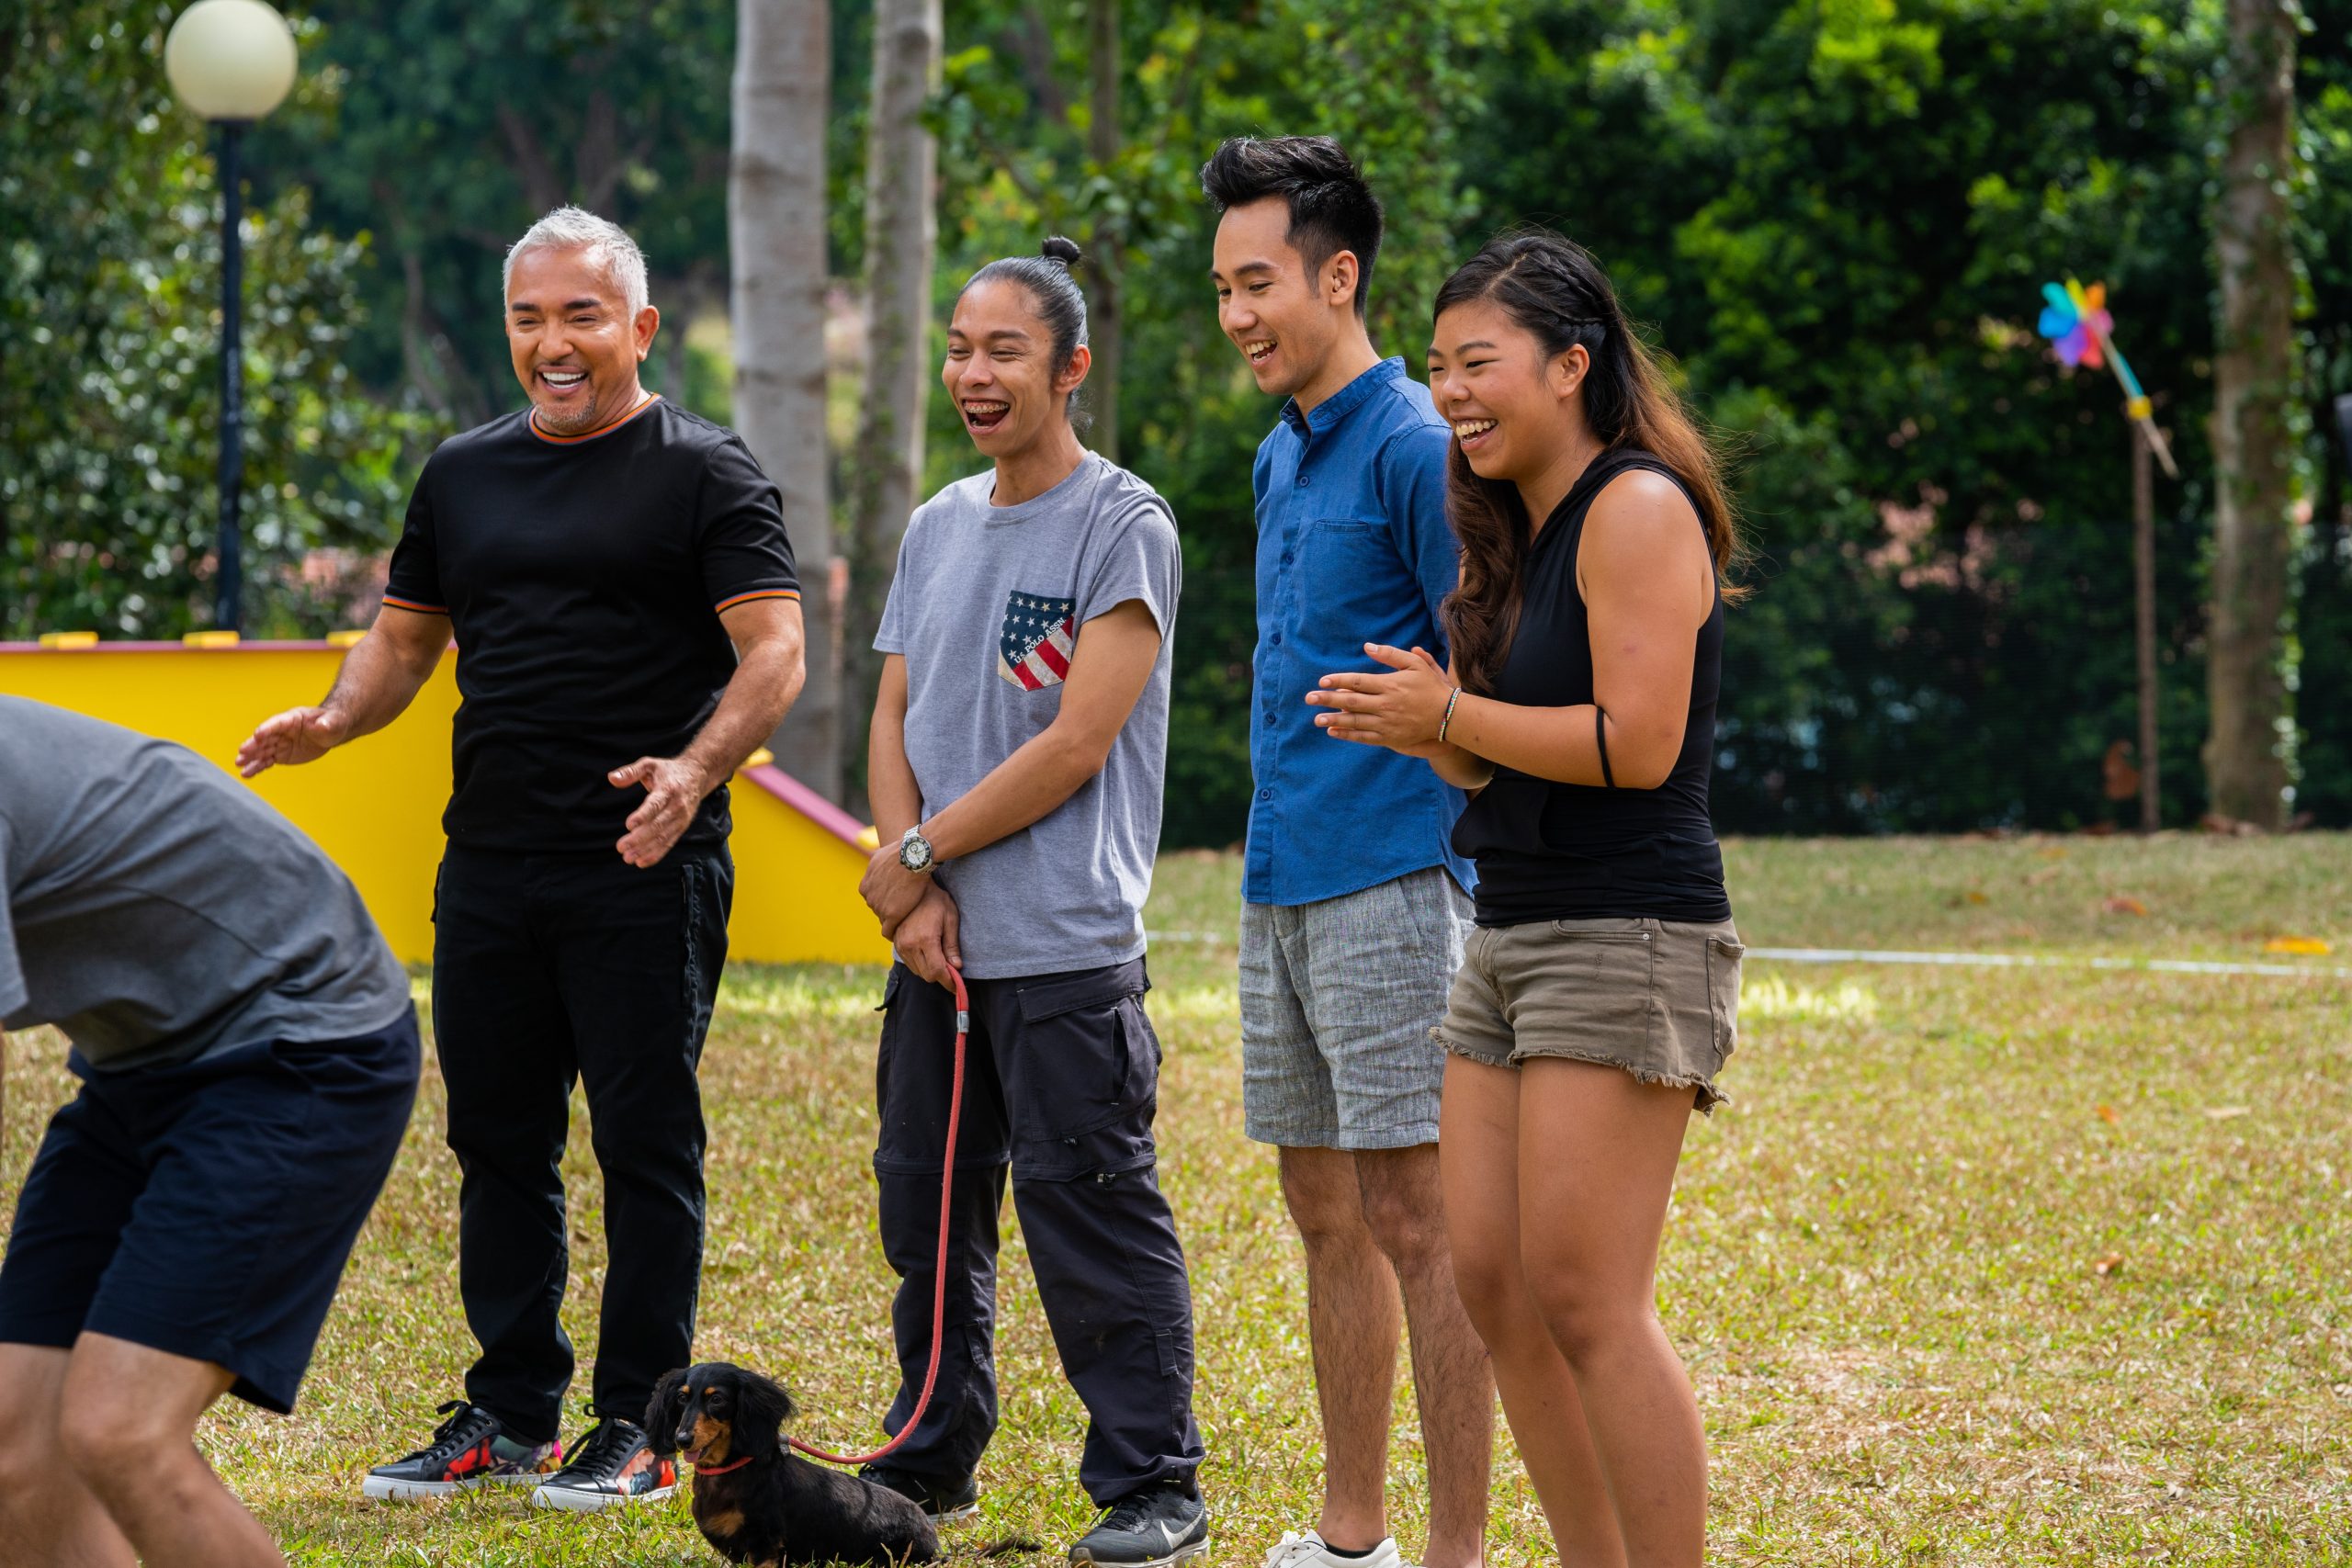 Dog Whisperer Cesar Millan Is on the Hunt for His Latest Recruit in Singapore